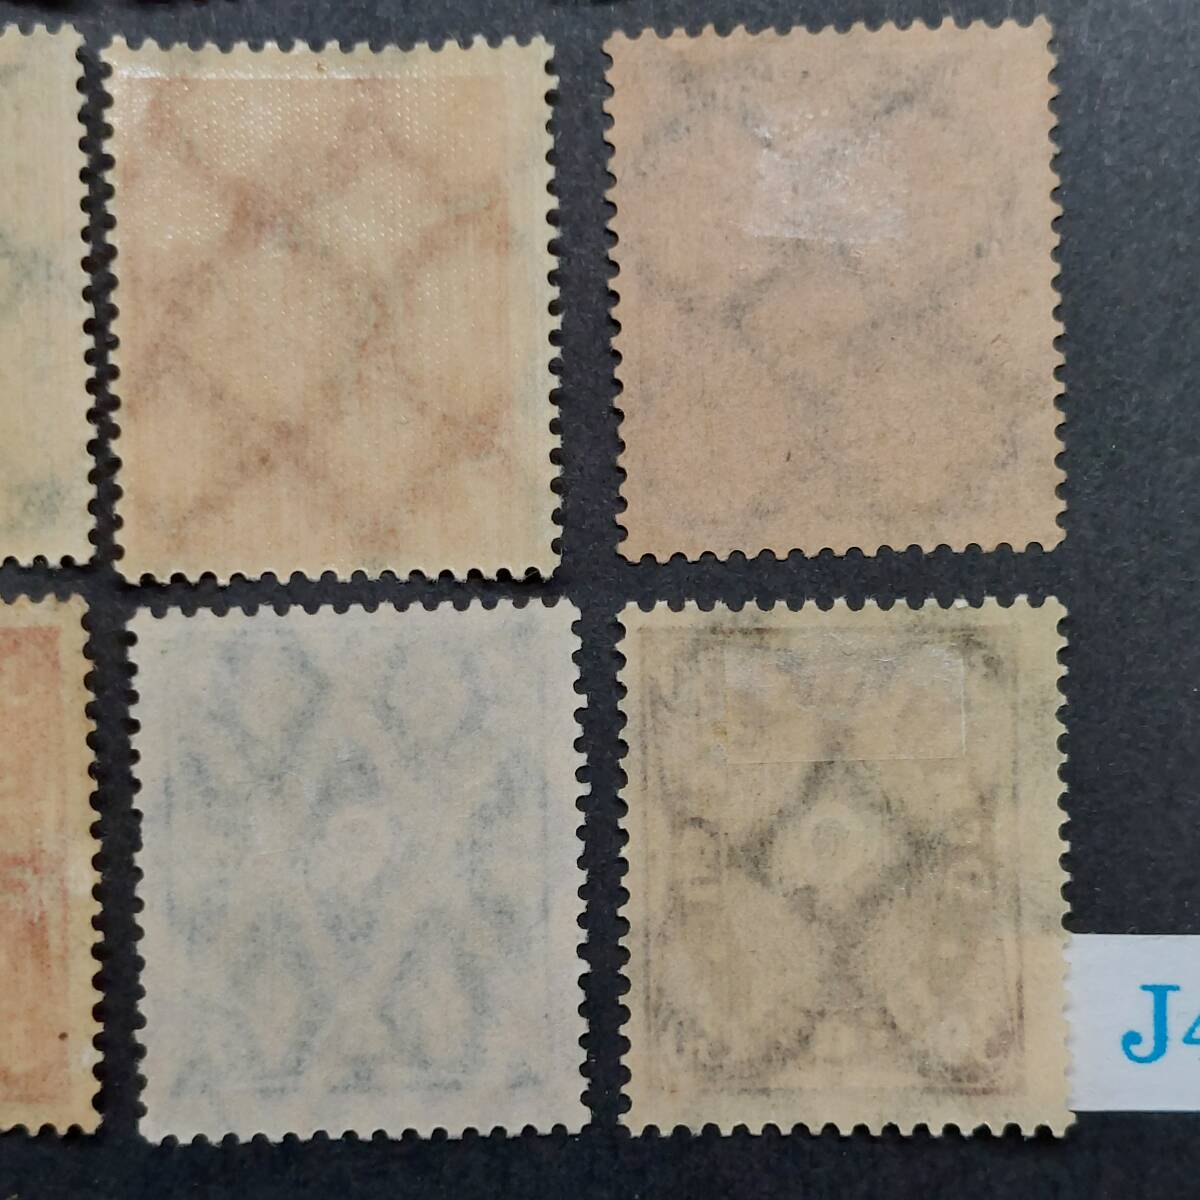 J469 ワイマール共和政体切手「数字切手(加刷・高額含む)8種、労働者4種、ポストホルン4種」1922-23年発行 未使用の画像10